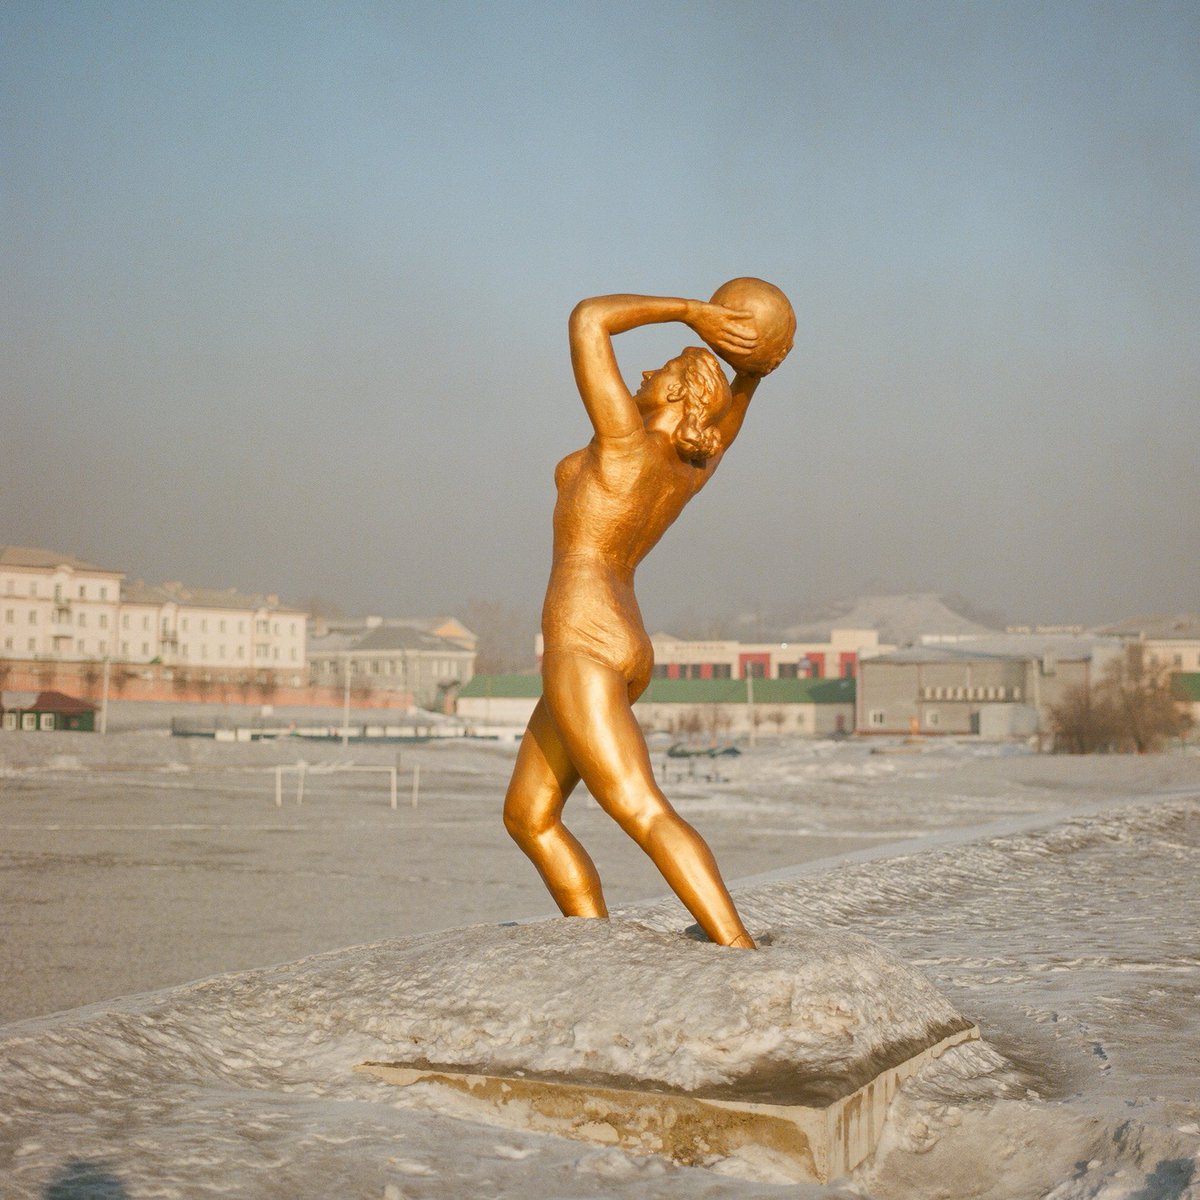 Прокопьевск
зима 2024
portra 400
#filmphoto #portra400 #kodak